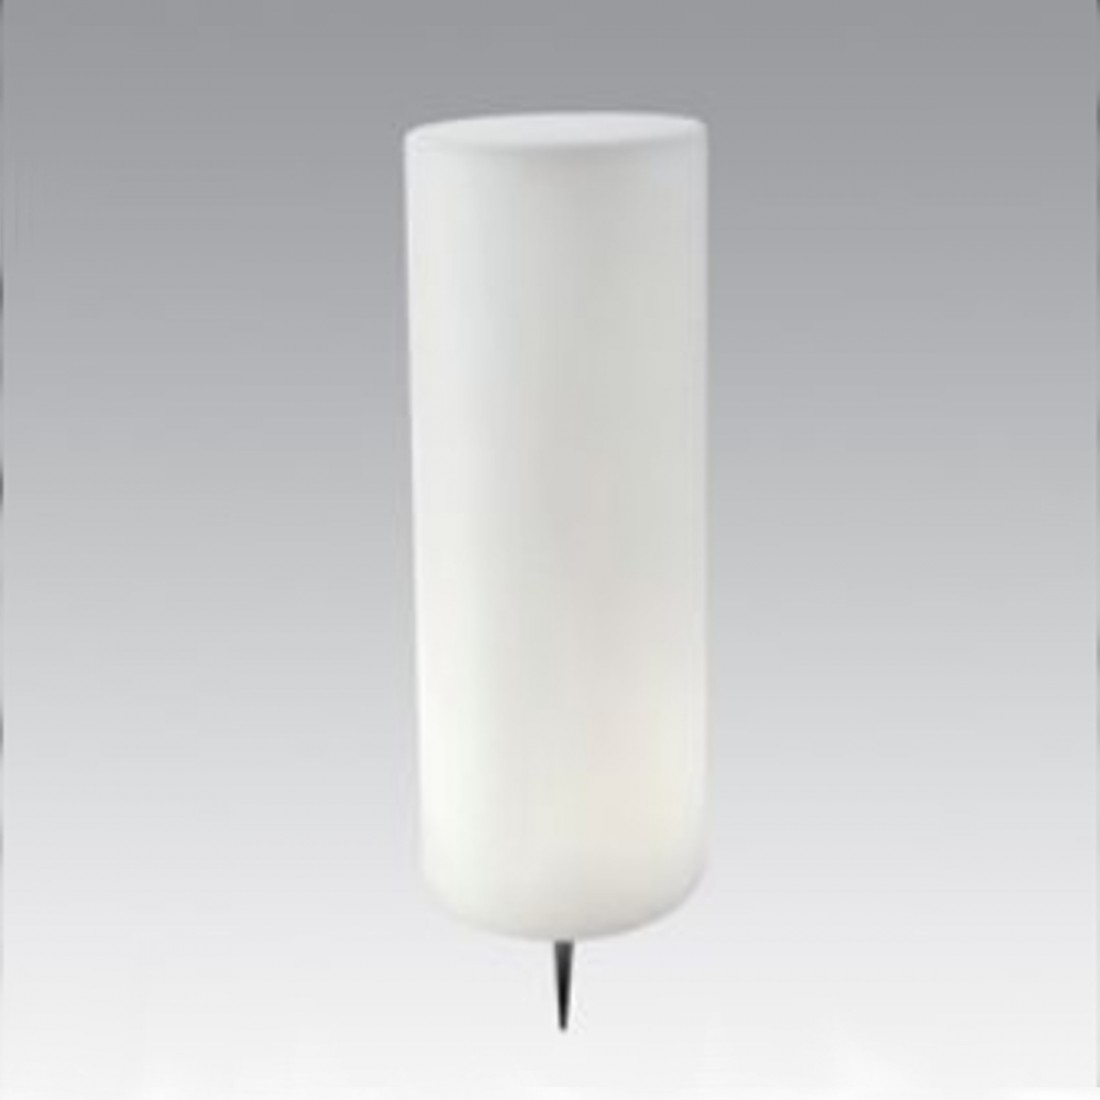 Lampada terra LV-ROLLER 382 E27 LED cilindro moderno resina bianca esterno IP54